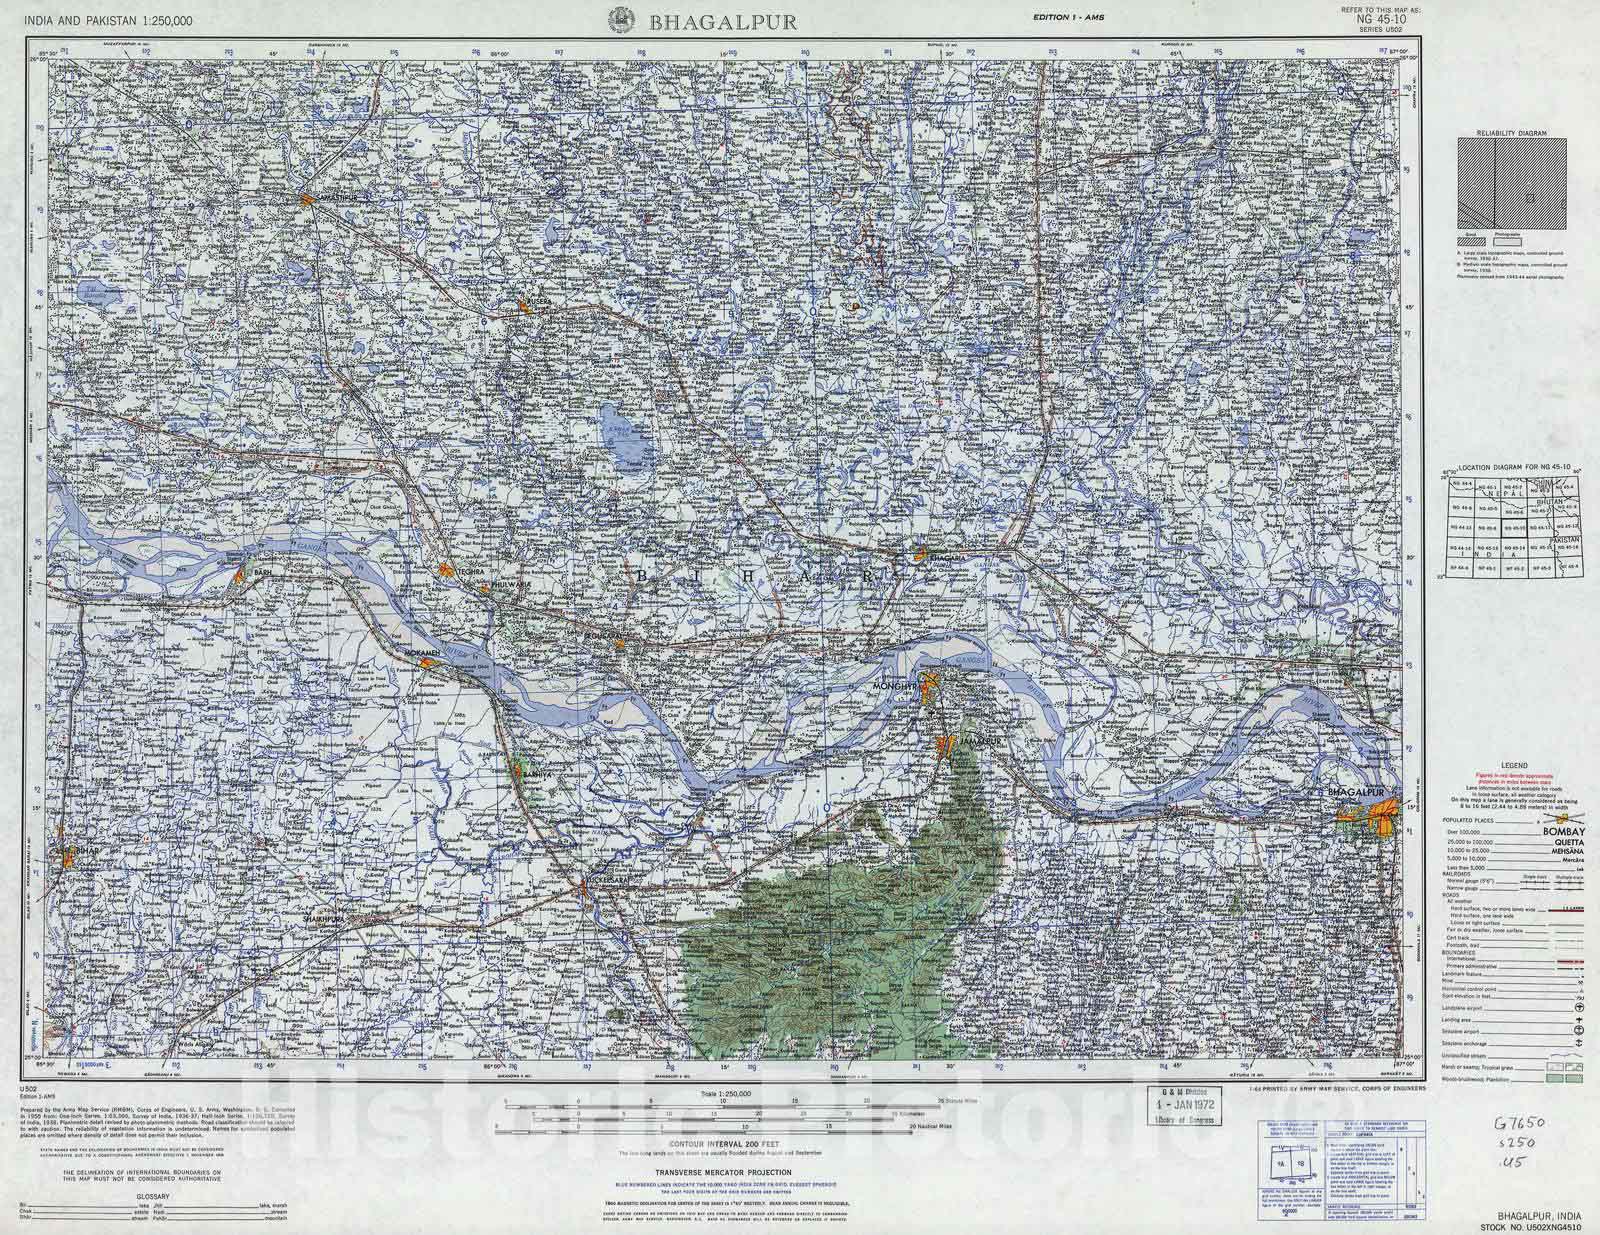 Historic 1955 Map - India and Pakistan 1:250,000. - Bhagalpur, India 1964